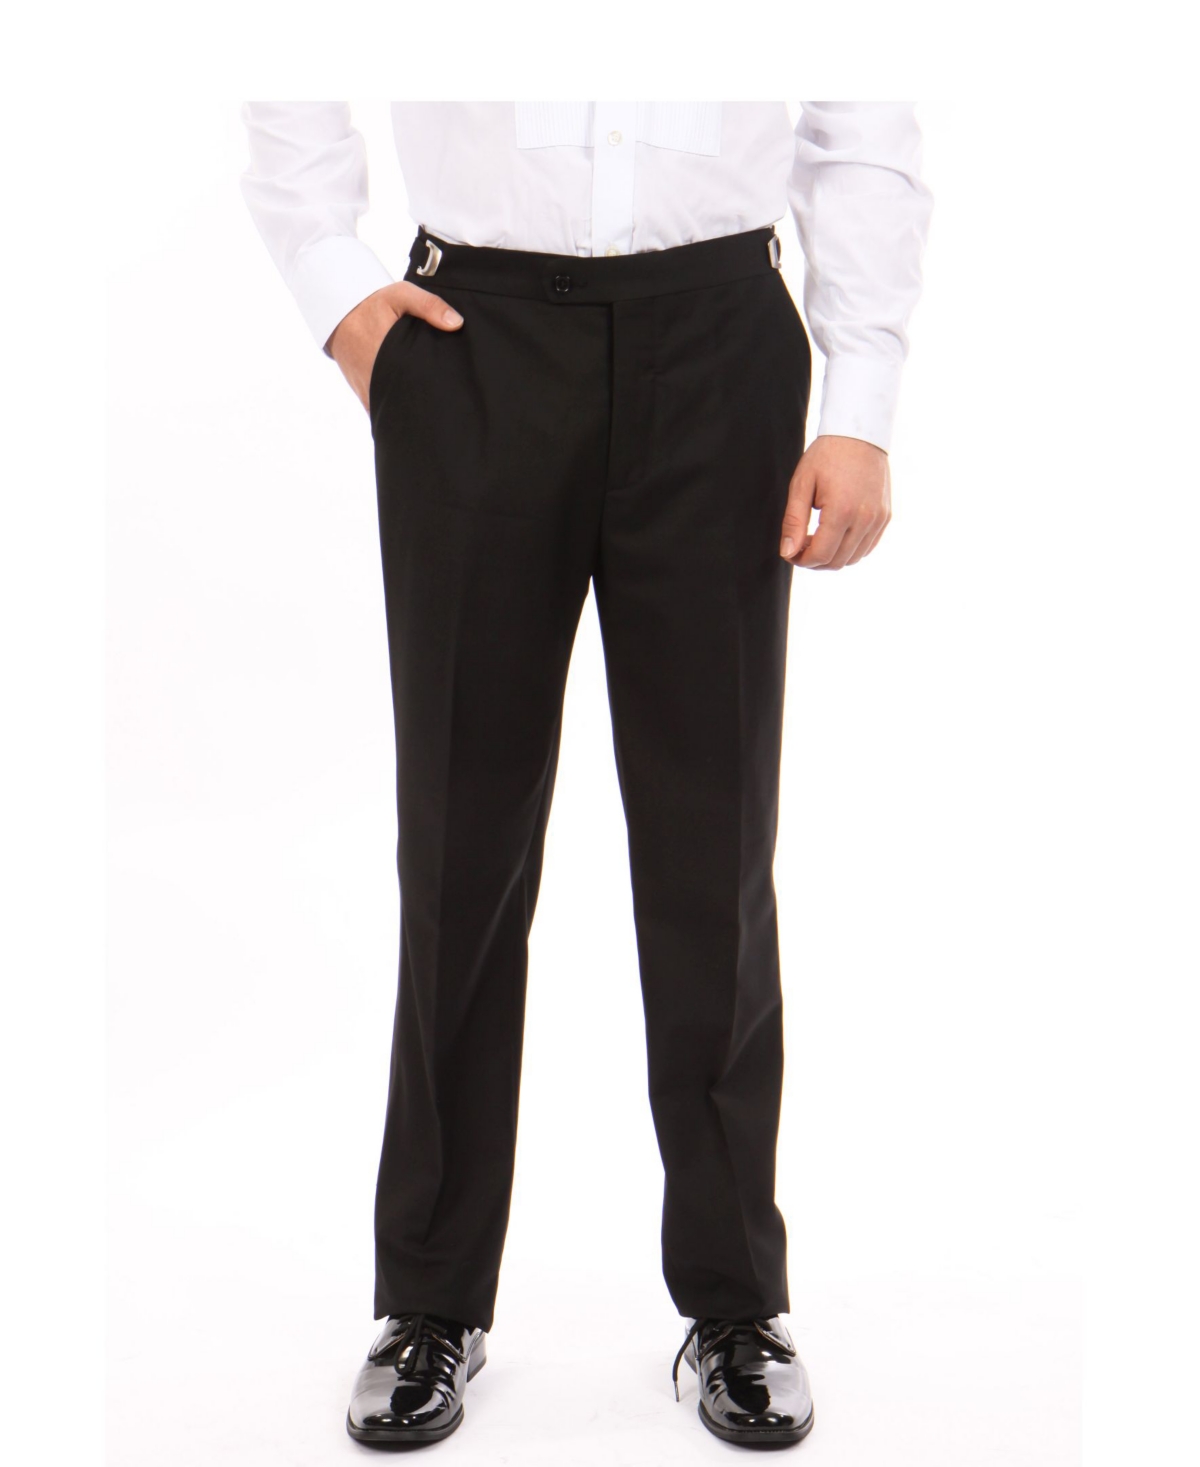 Men's Skinny Modern Fit Tuxedo Dress Pants - Black